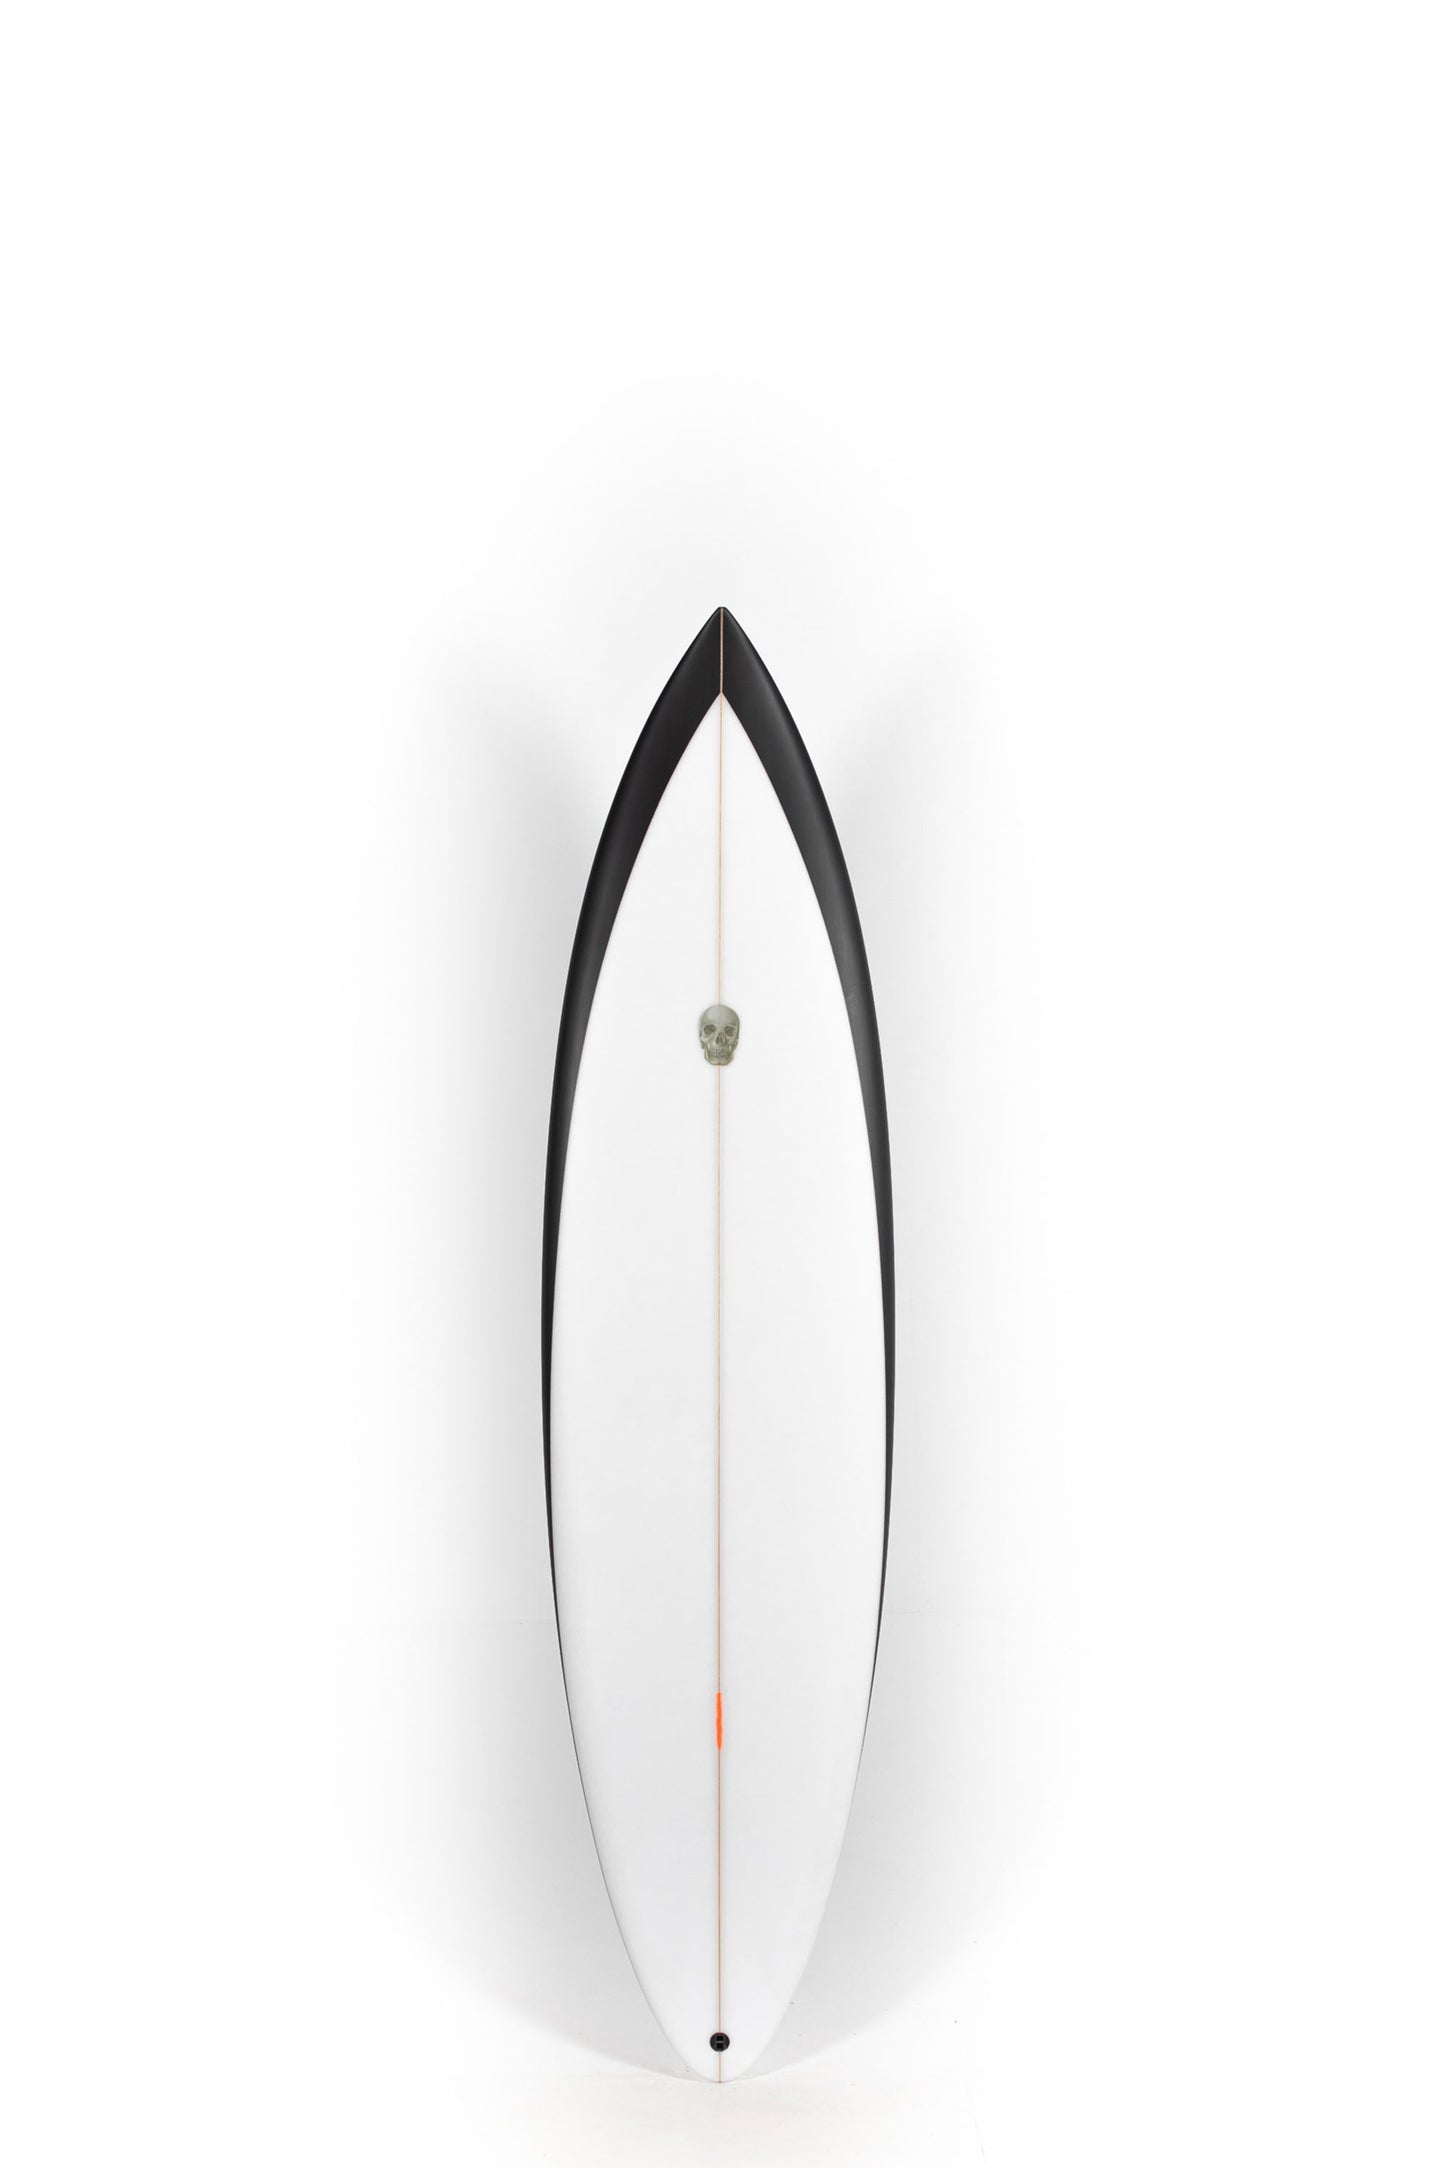 Pukas Surf Shop - Christenson Surfboards - CARRERA - 6'8" x 19 1/2 x 2 11/16 - 36,53L - CX04792